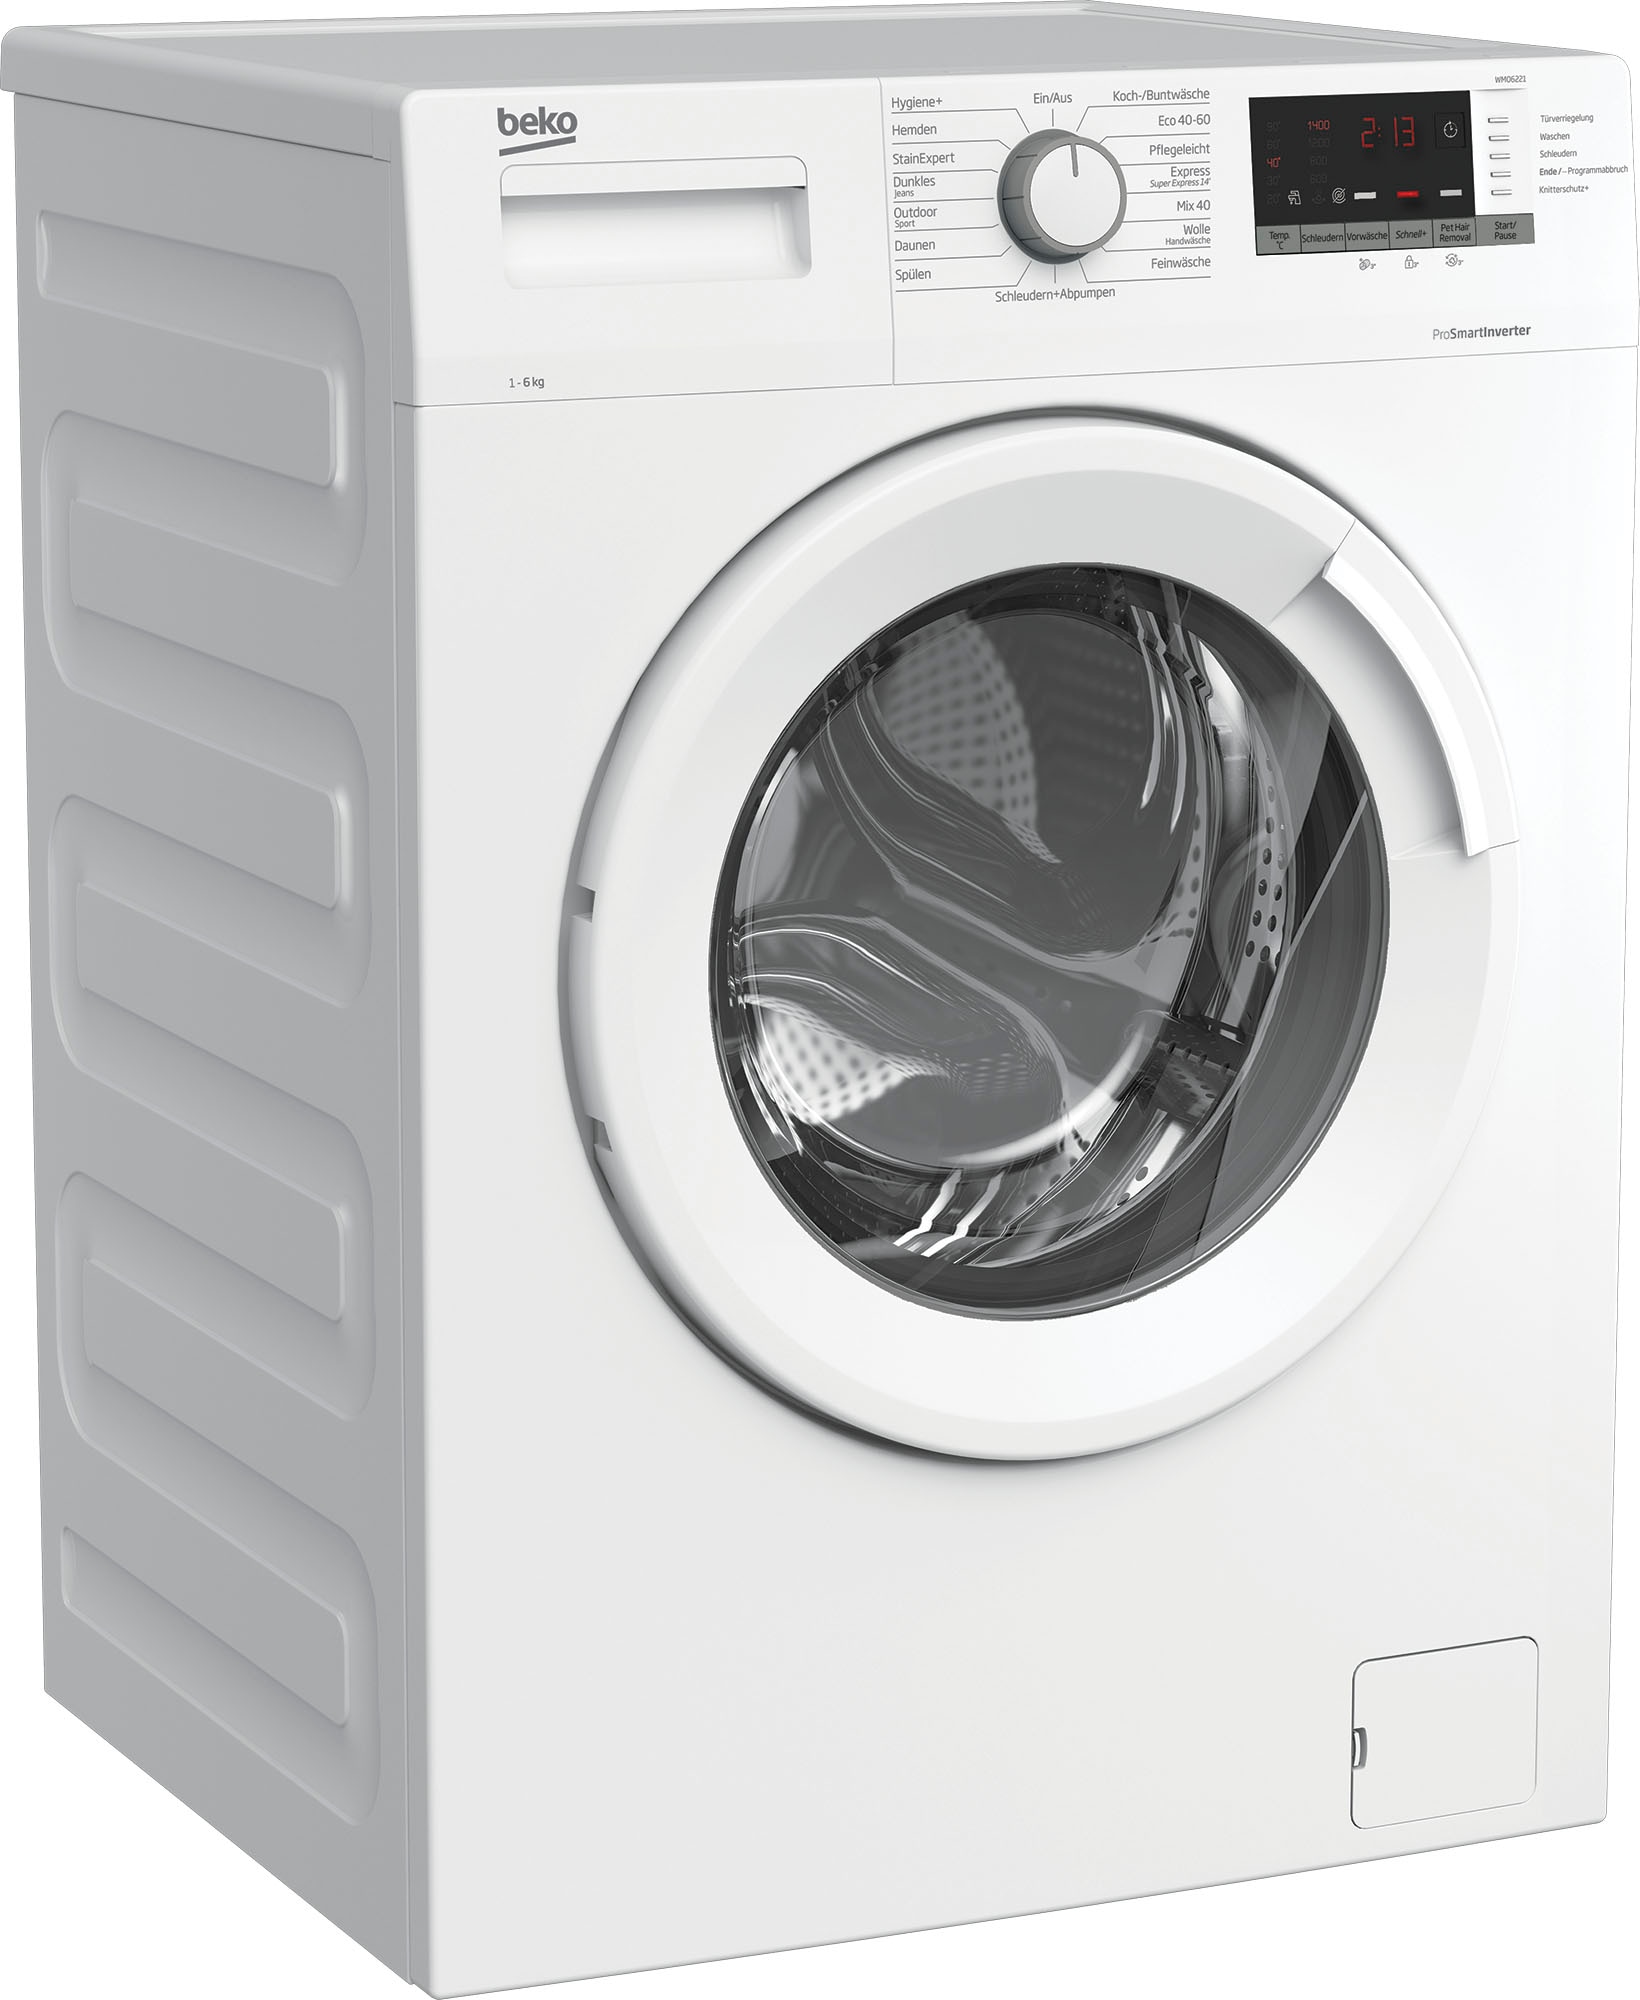 BEKO Waschmaschine »WMO6221«, WMO6221 7146543700, U/min auf 6 1400 kg, Raten kaufen